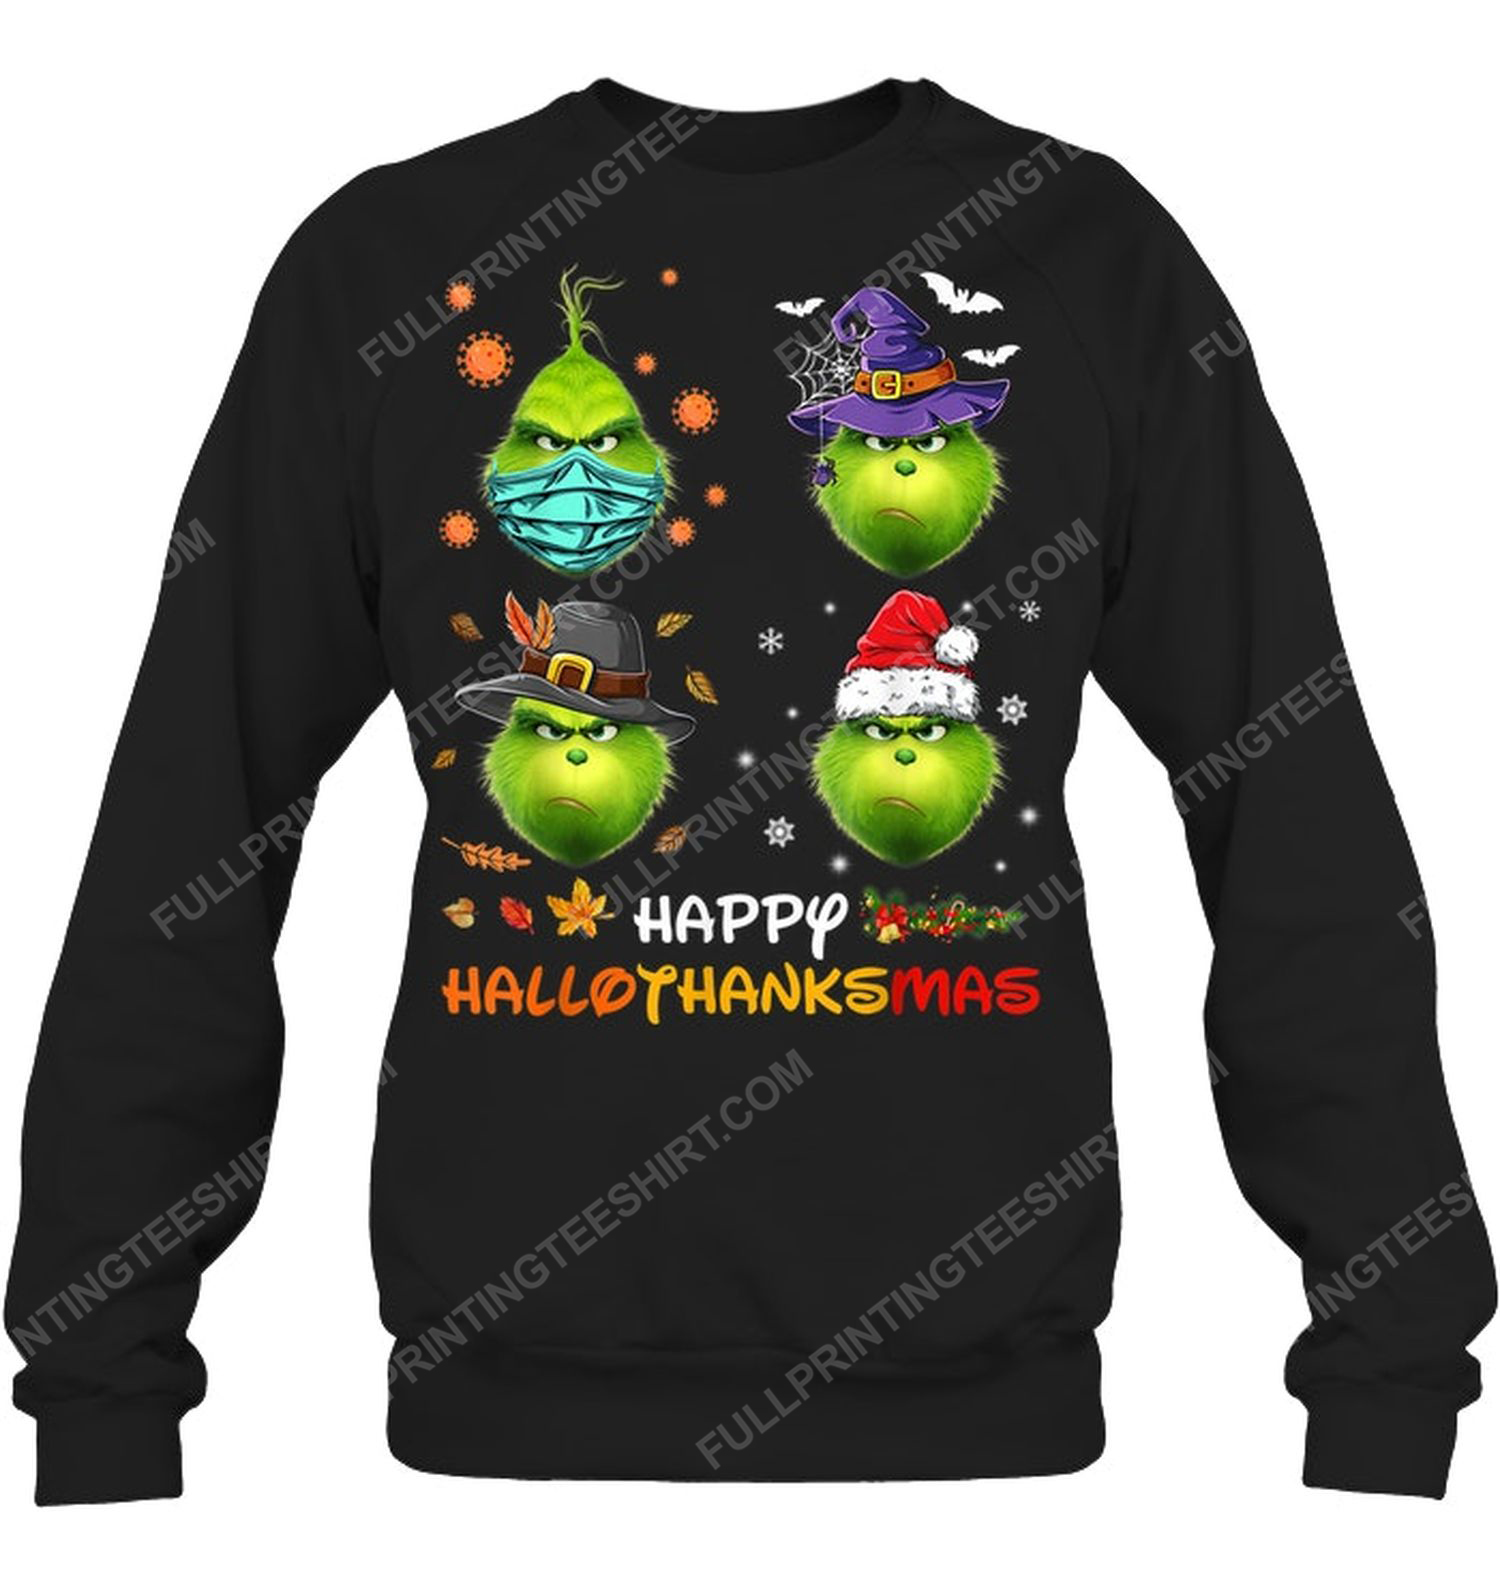 The grinch happy hallothanksmas and merry christmas fall sweatshirt